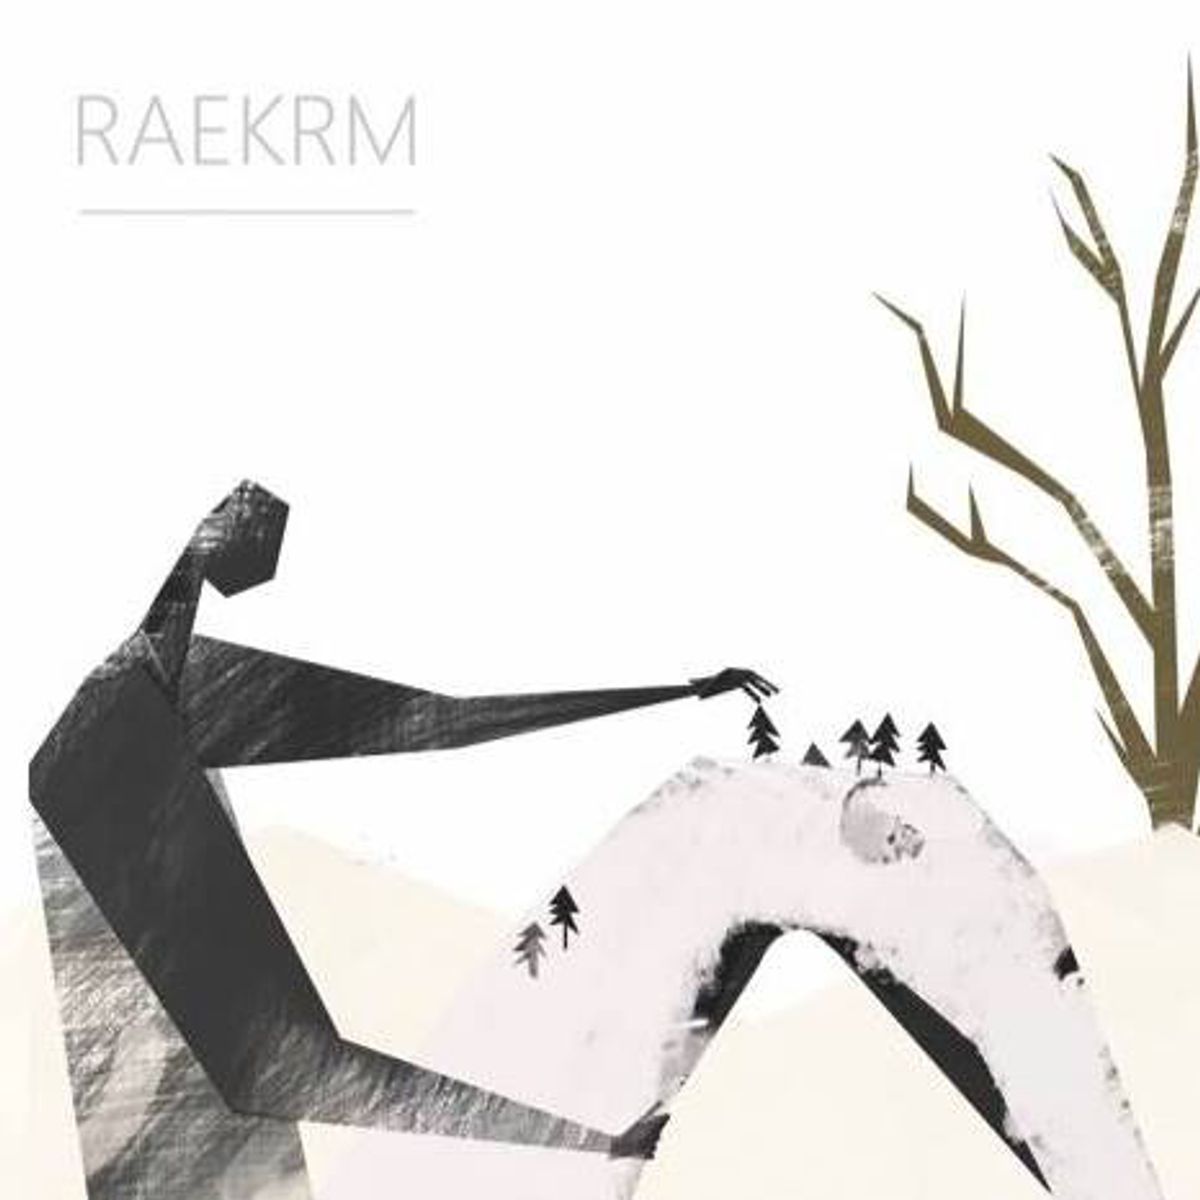 Raekrm - 'Raekrm'